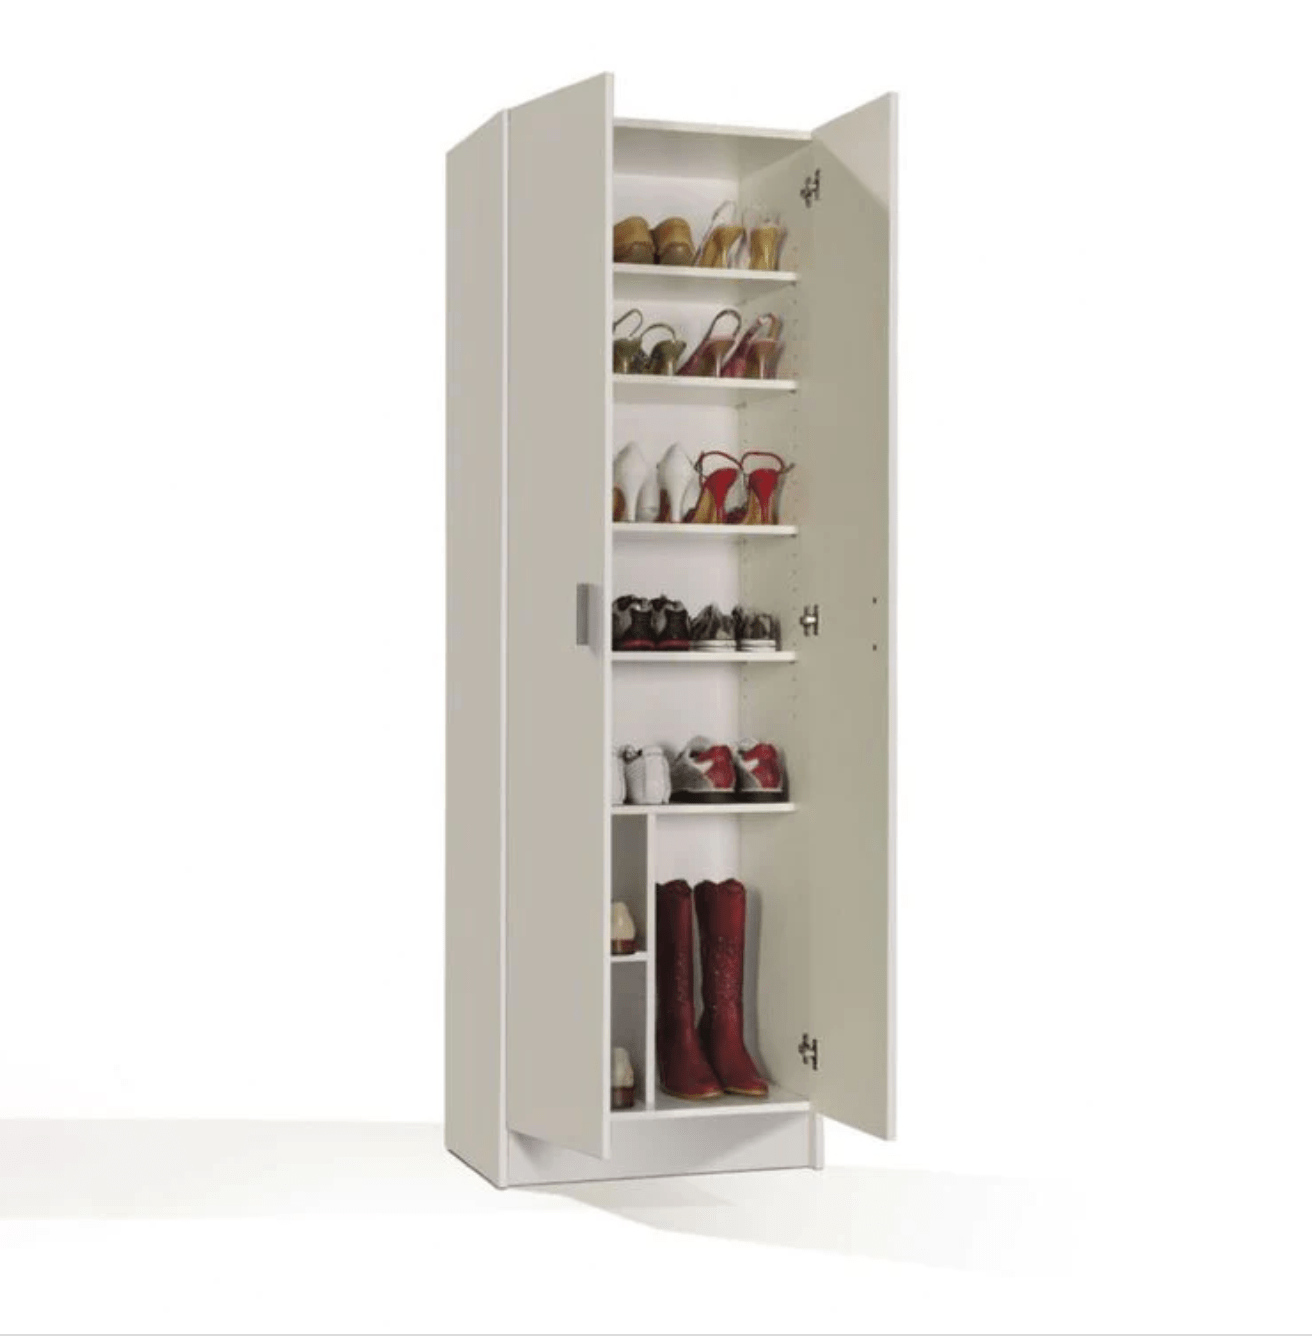 Shoe storage unit - Mac06